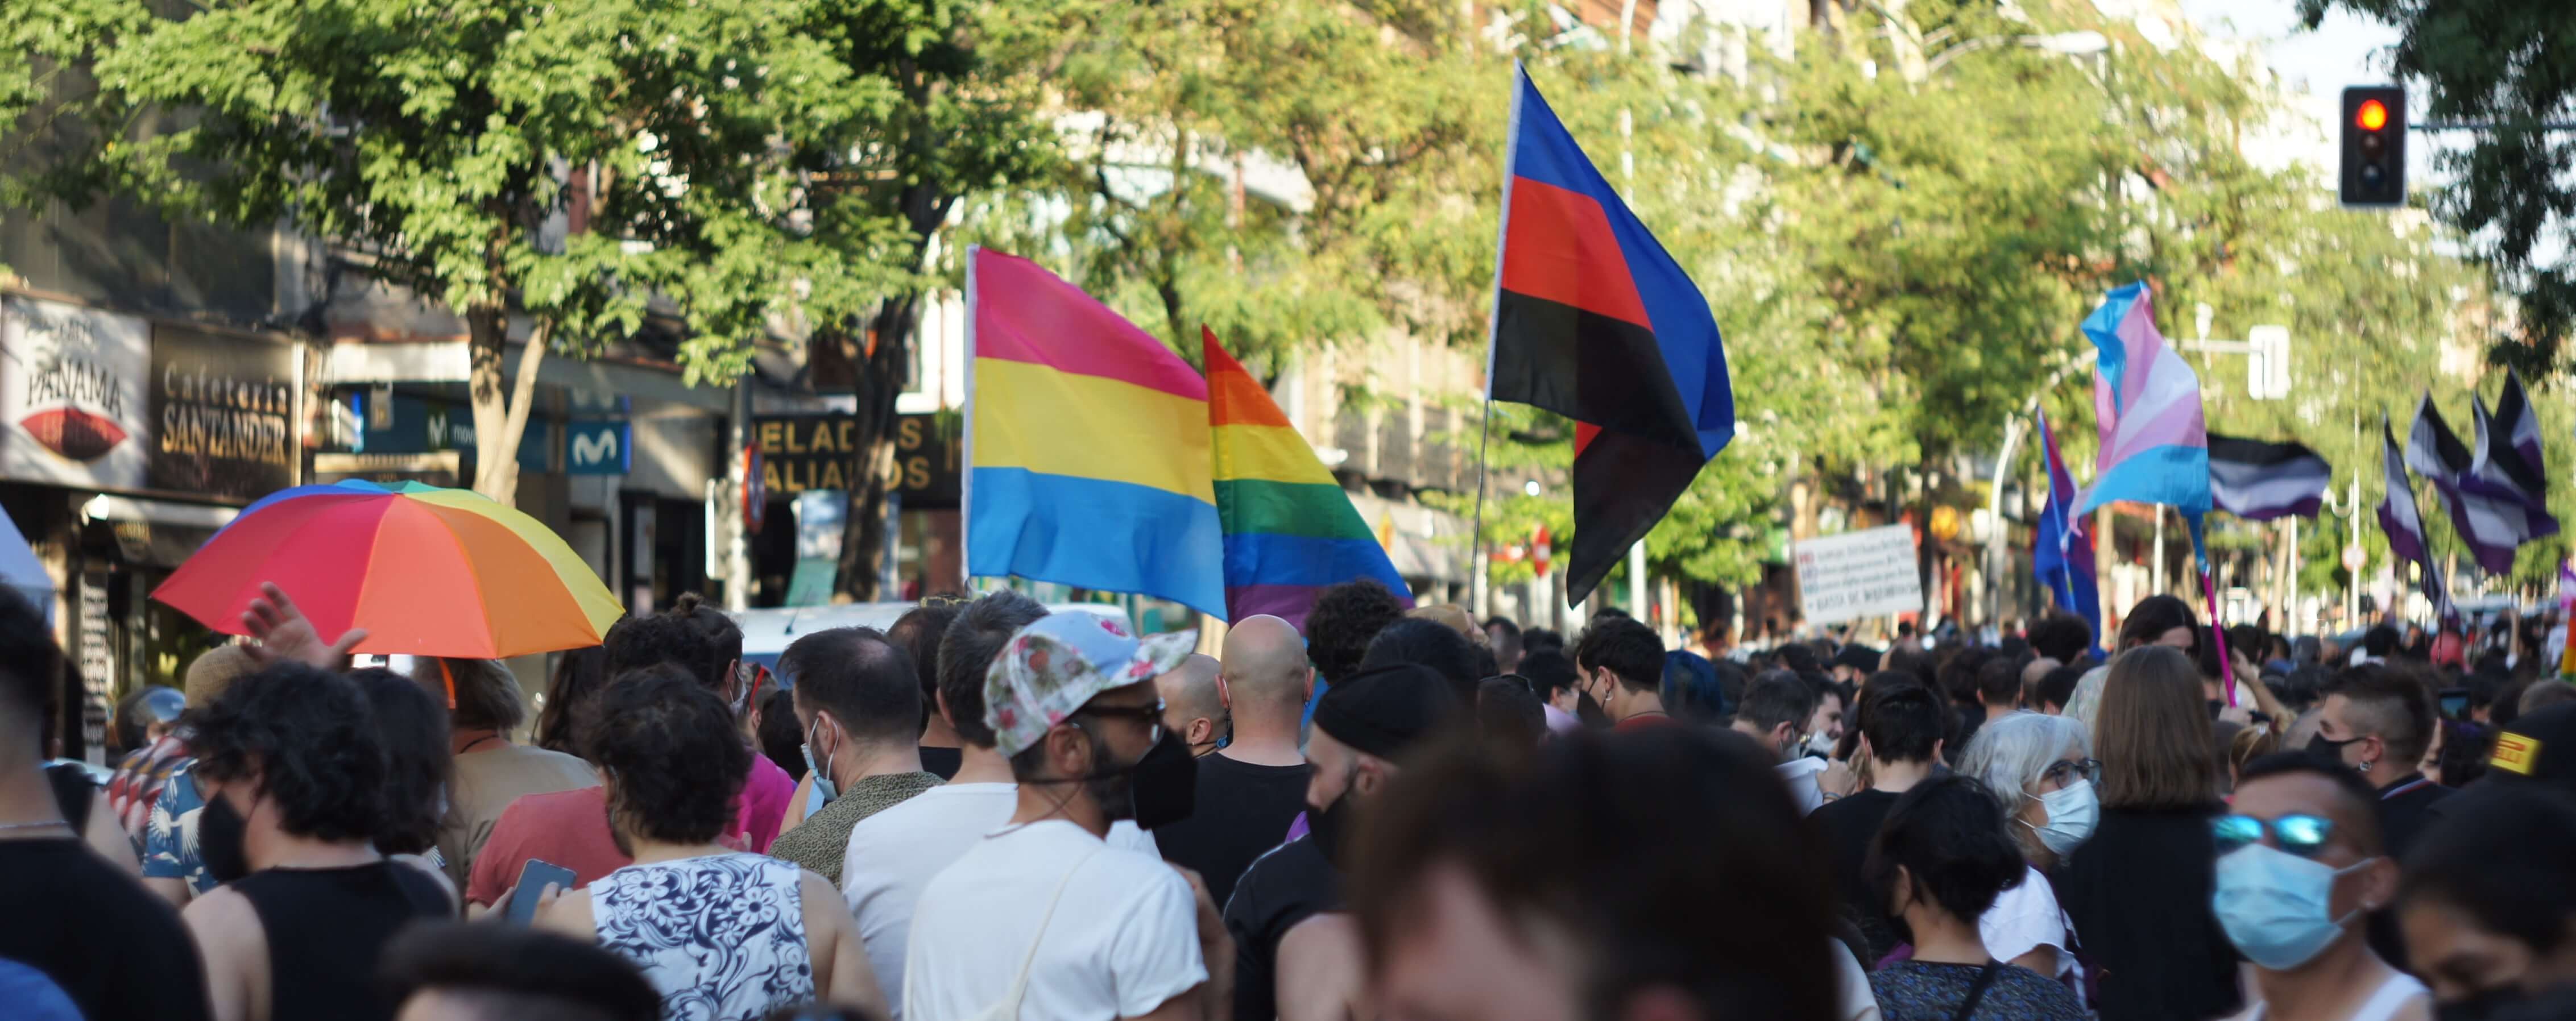 Ukraine LGBTQ pride parade celebrated in Poland